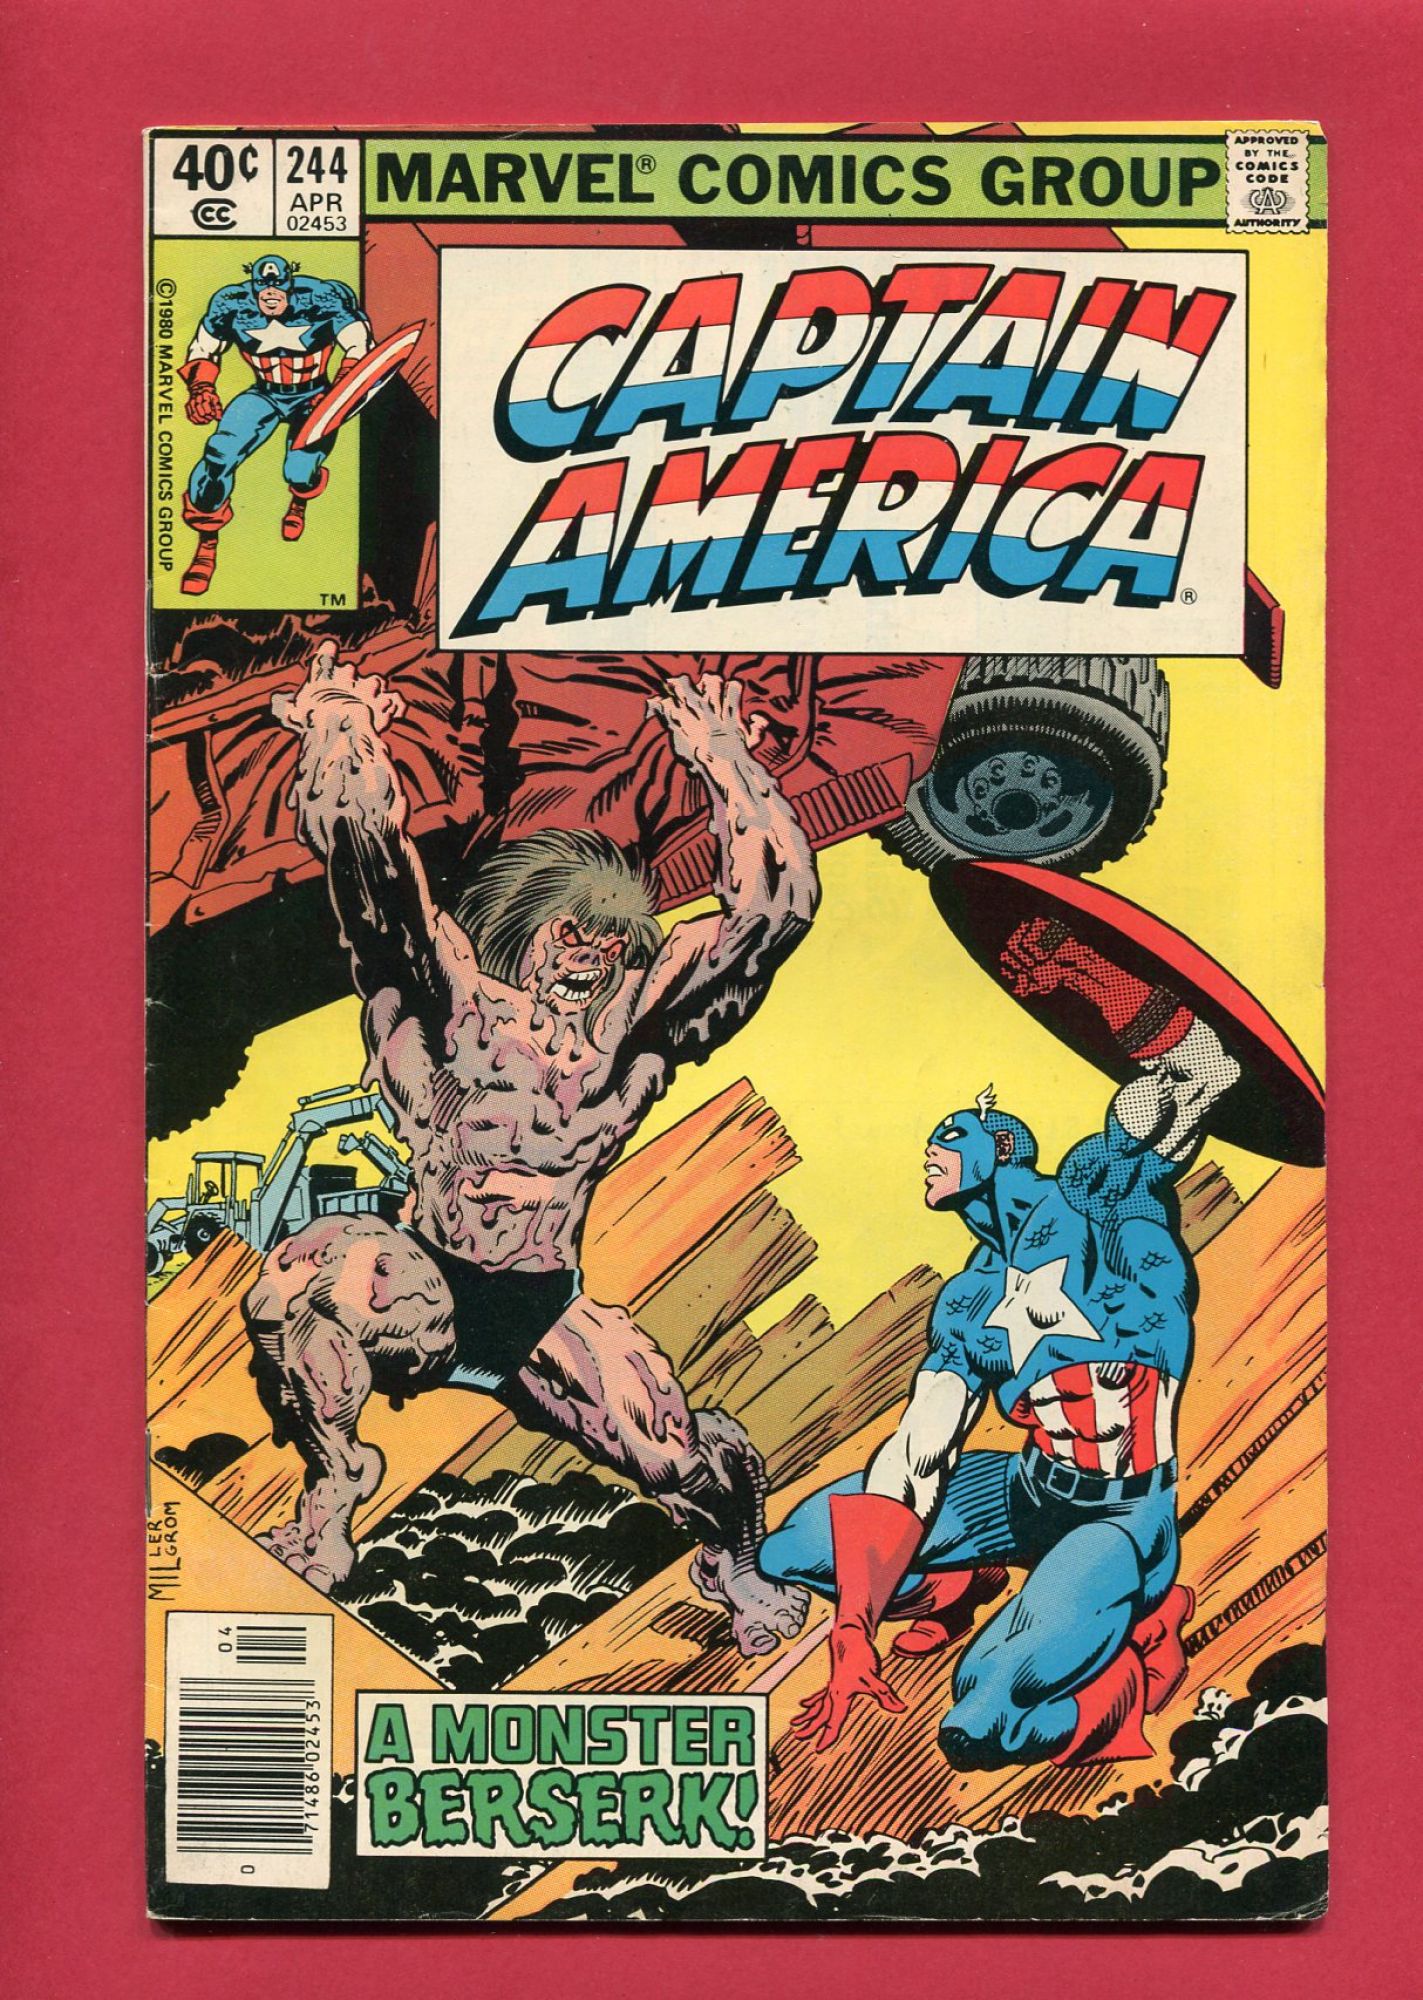 Captain America #244, Apr 1980, 6.0 FN